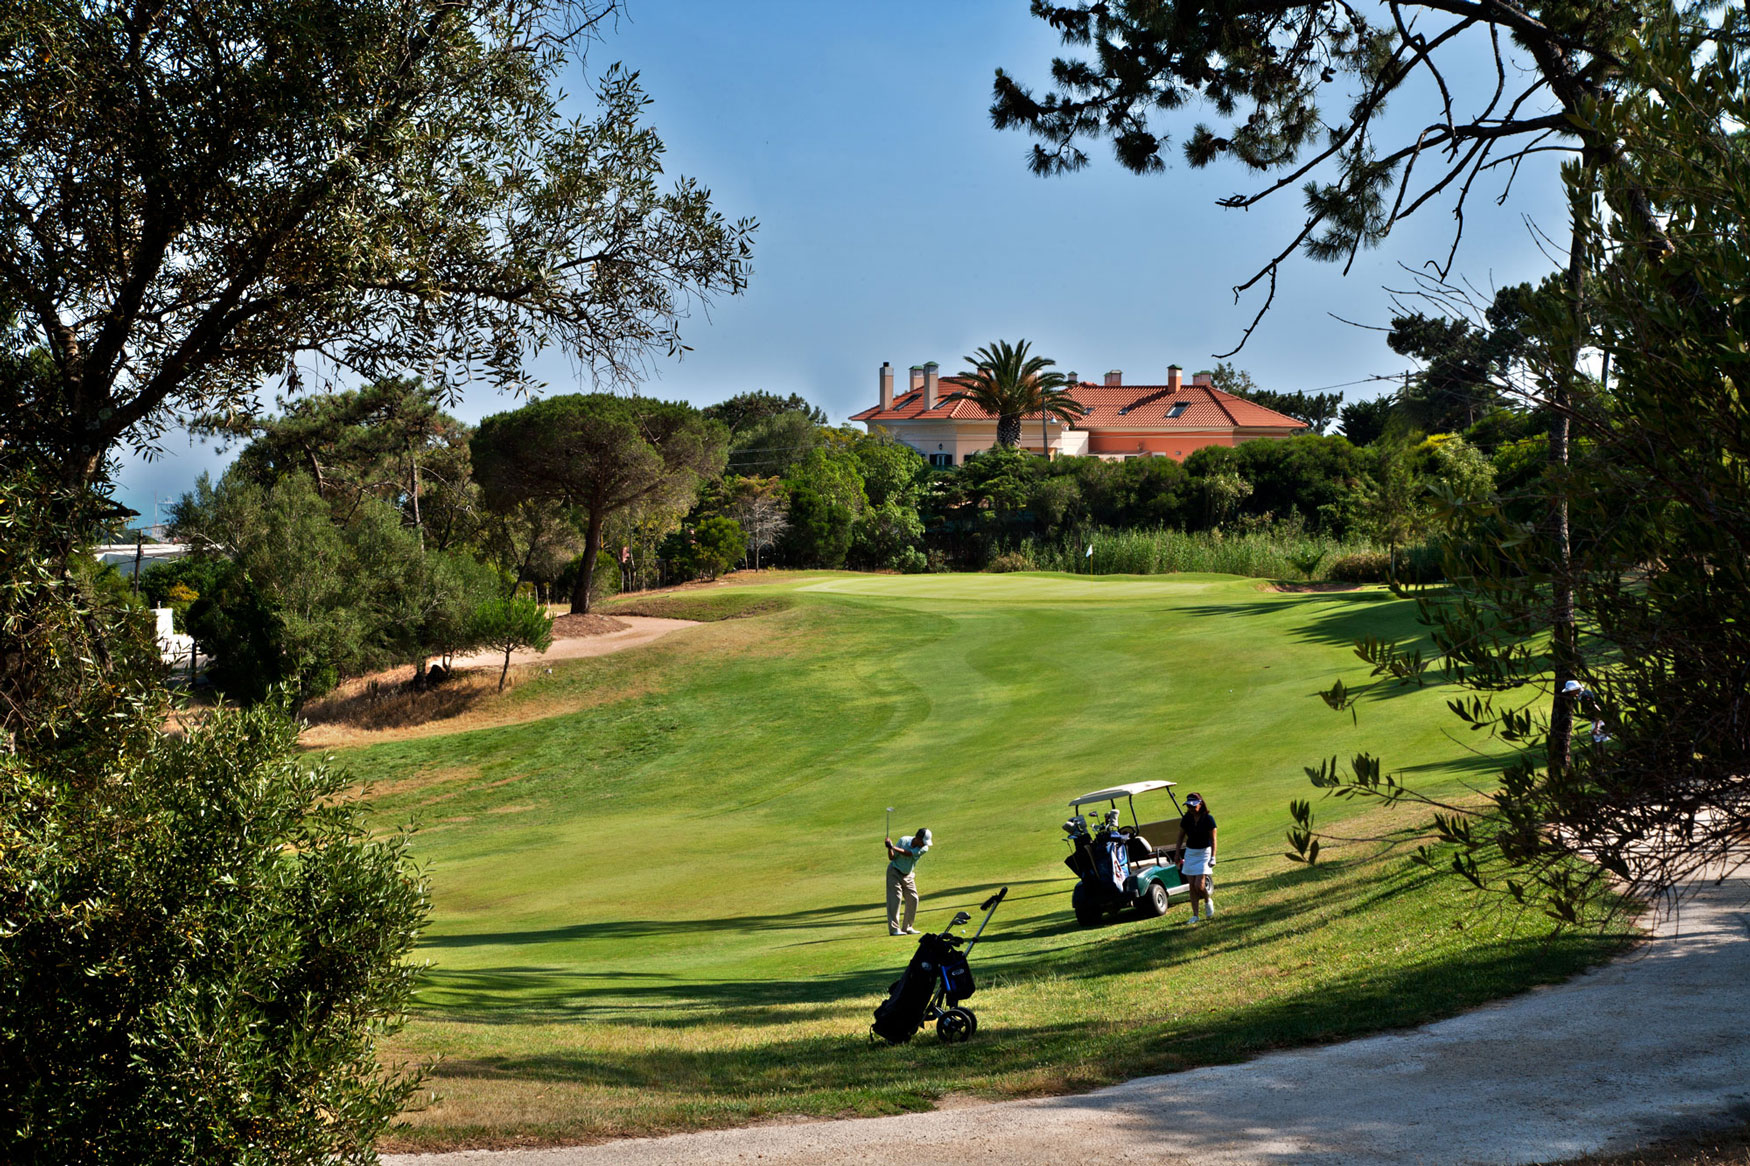 Golf-expedition-golfreizen-golfresort-Palacio-Estoril-Hotel-Golf-And-Spa-golfbaan-hole-1-with-caddy